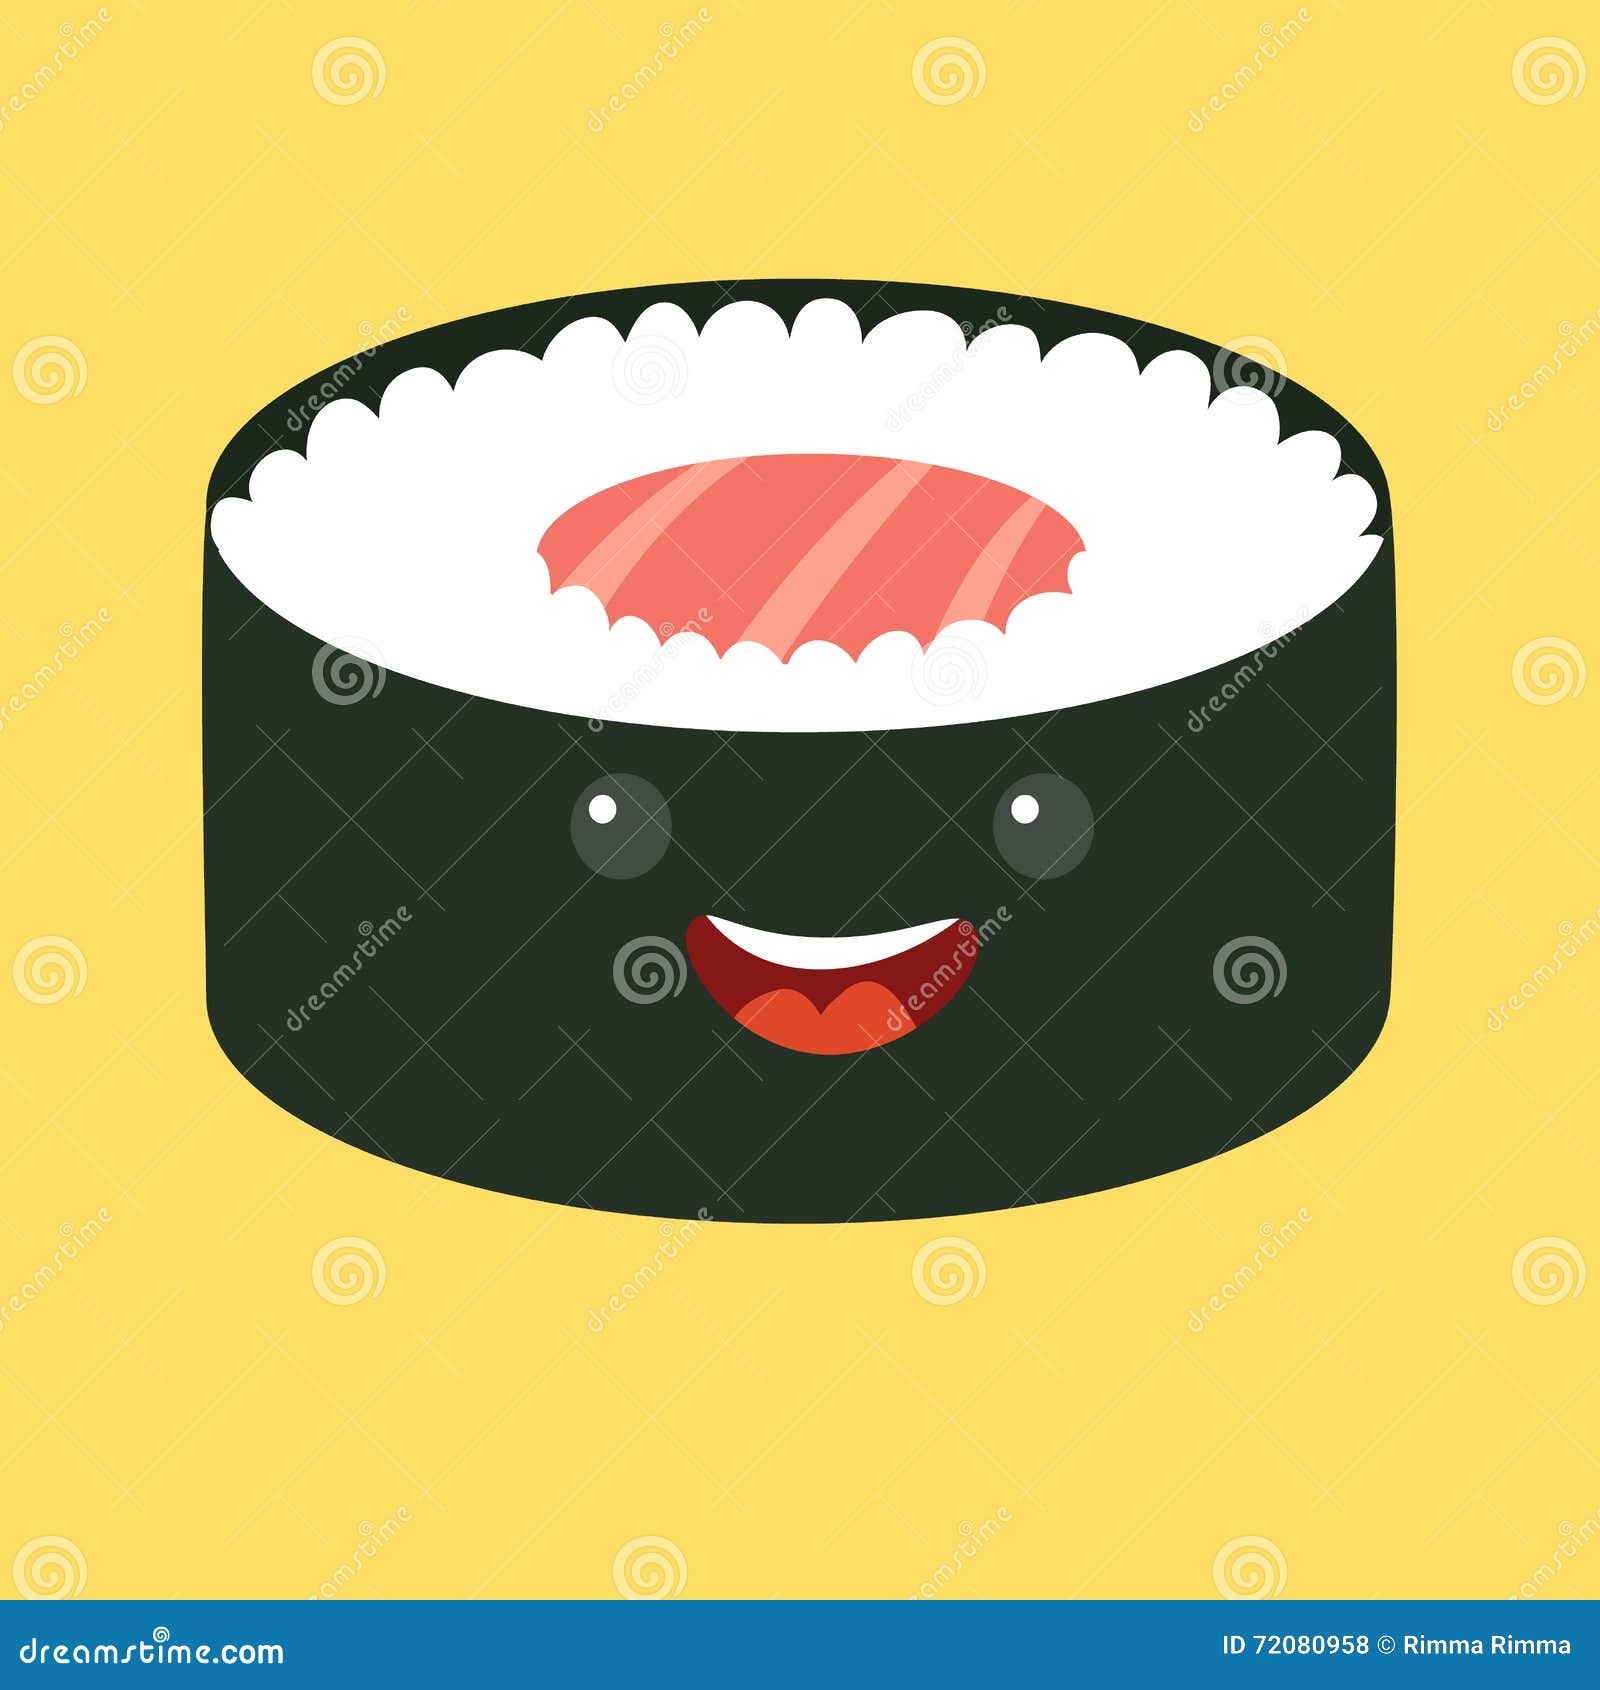 Fun Sushi Vector Cartoon Character. Cute Sushi Roll. Japanese Food